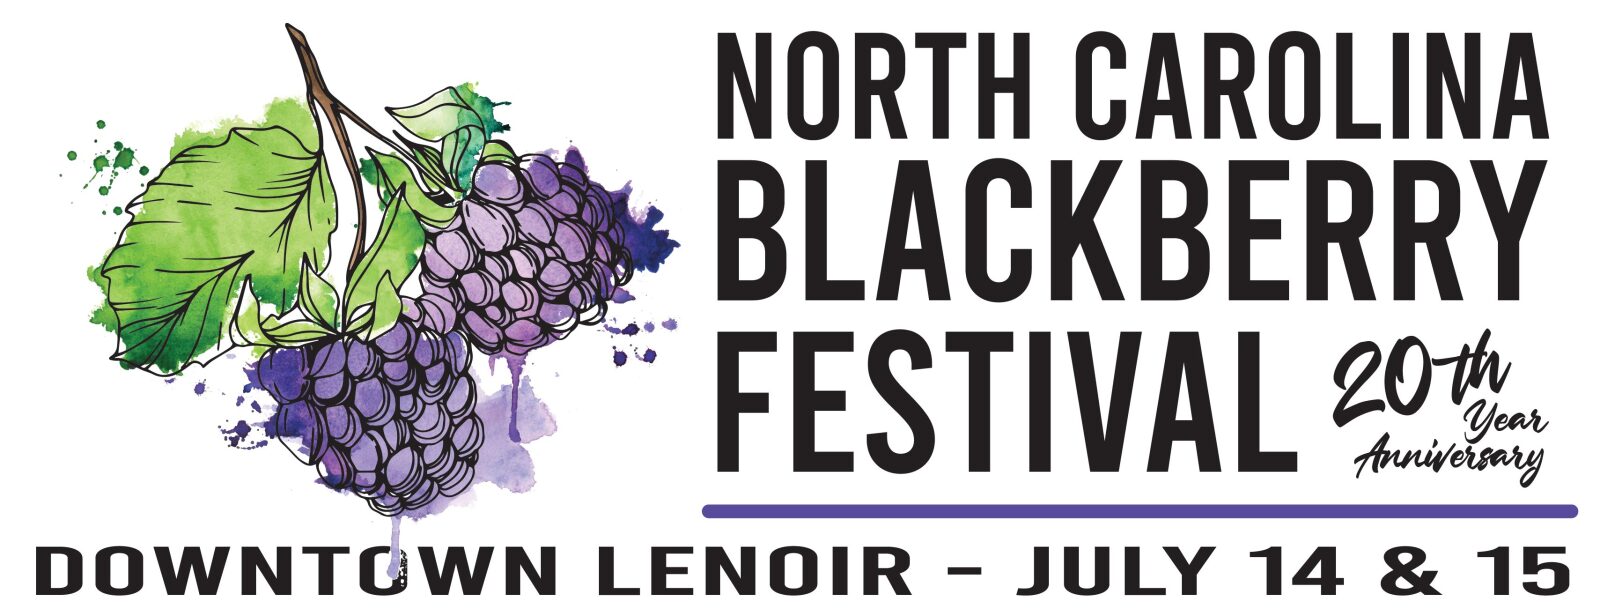 NC Blackberry Festival 20th Anniversary